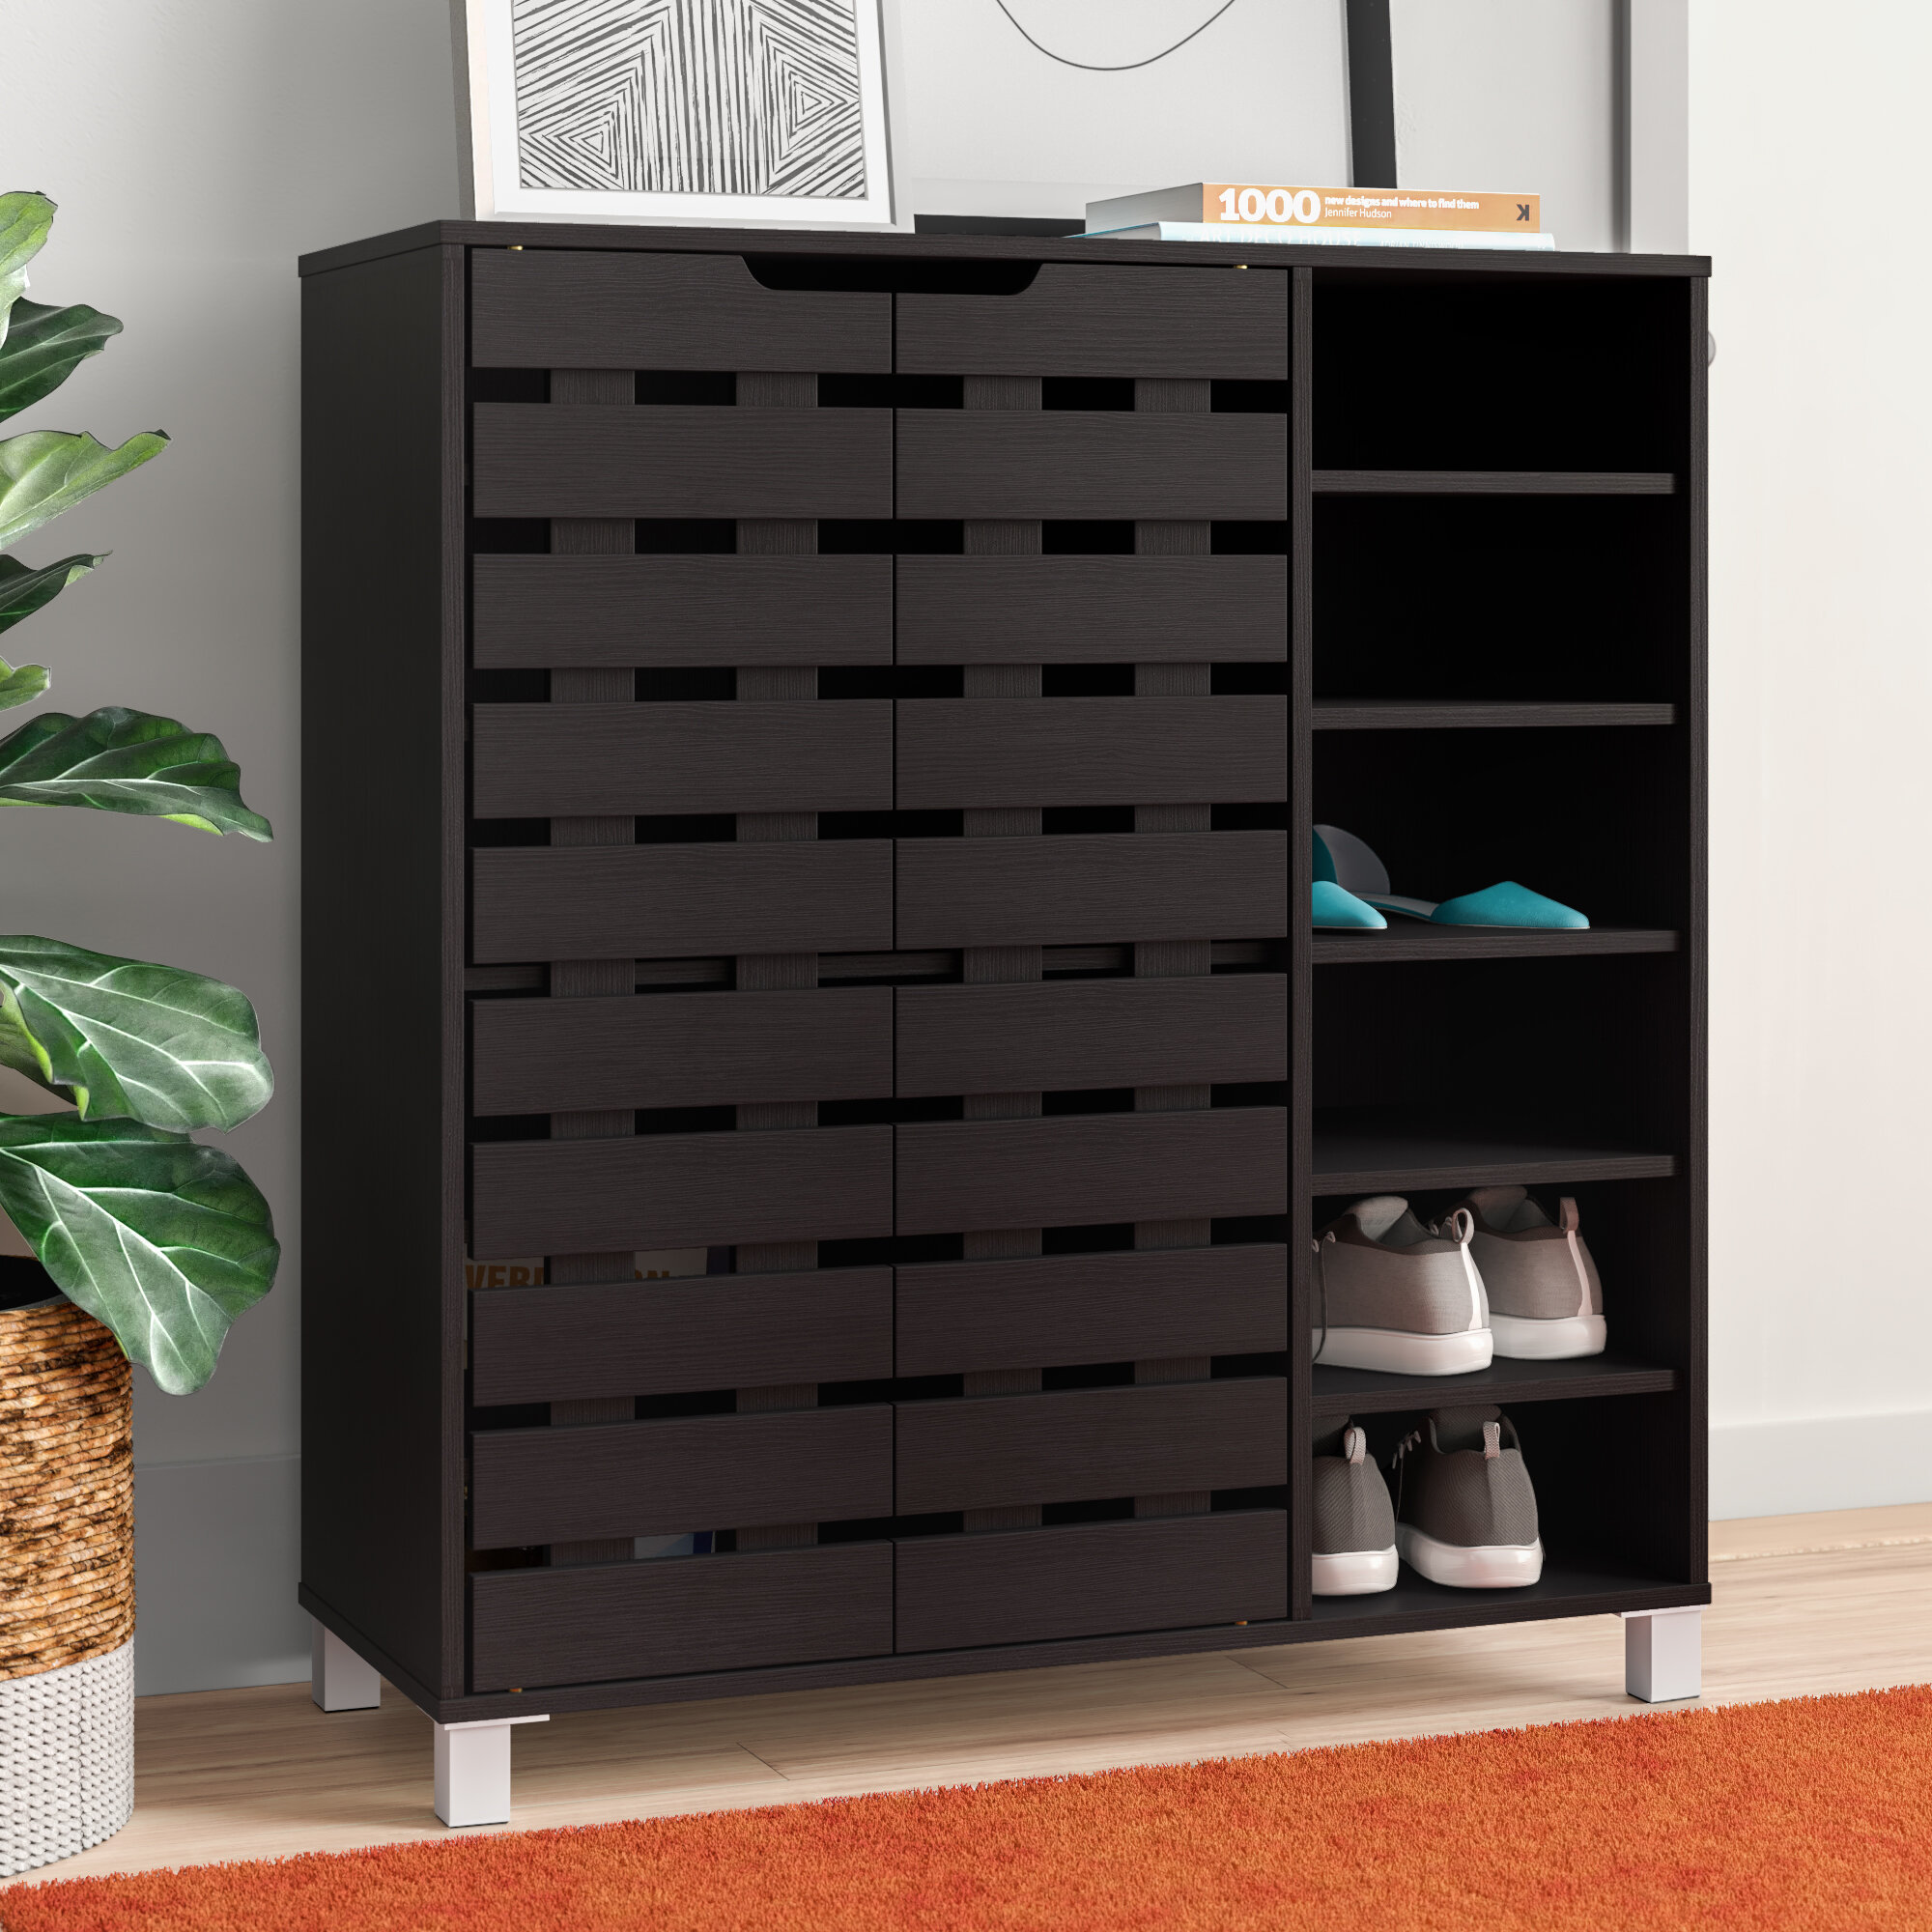 Zipcode Design 24 Pair Shoe Storage Cabinet Reviews Wayfair